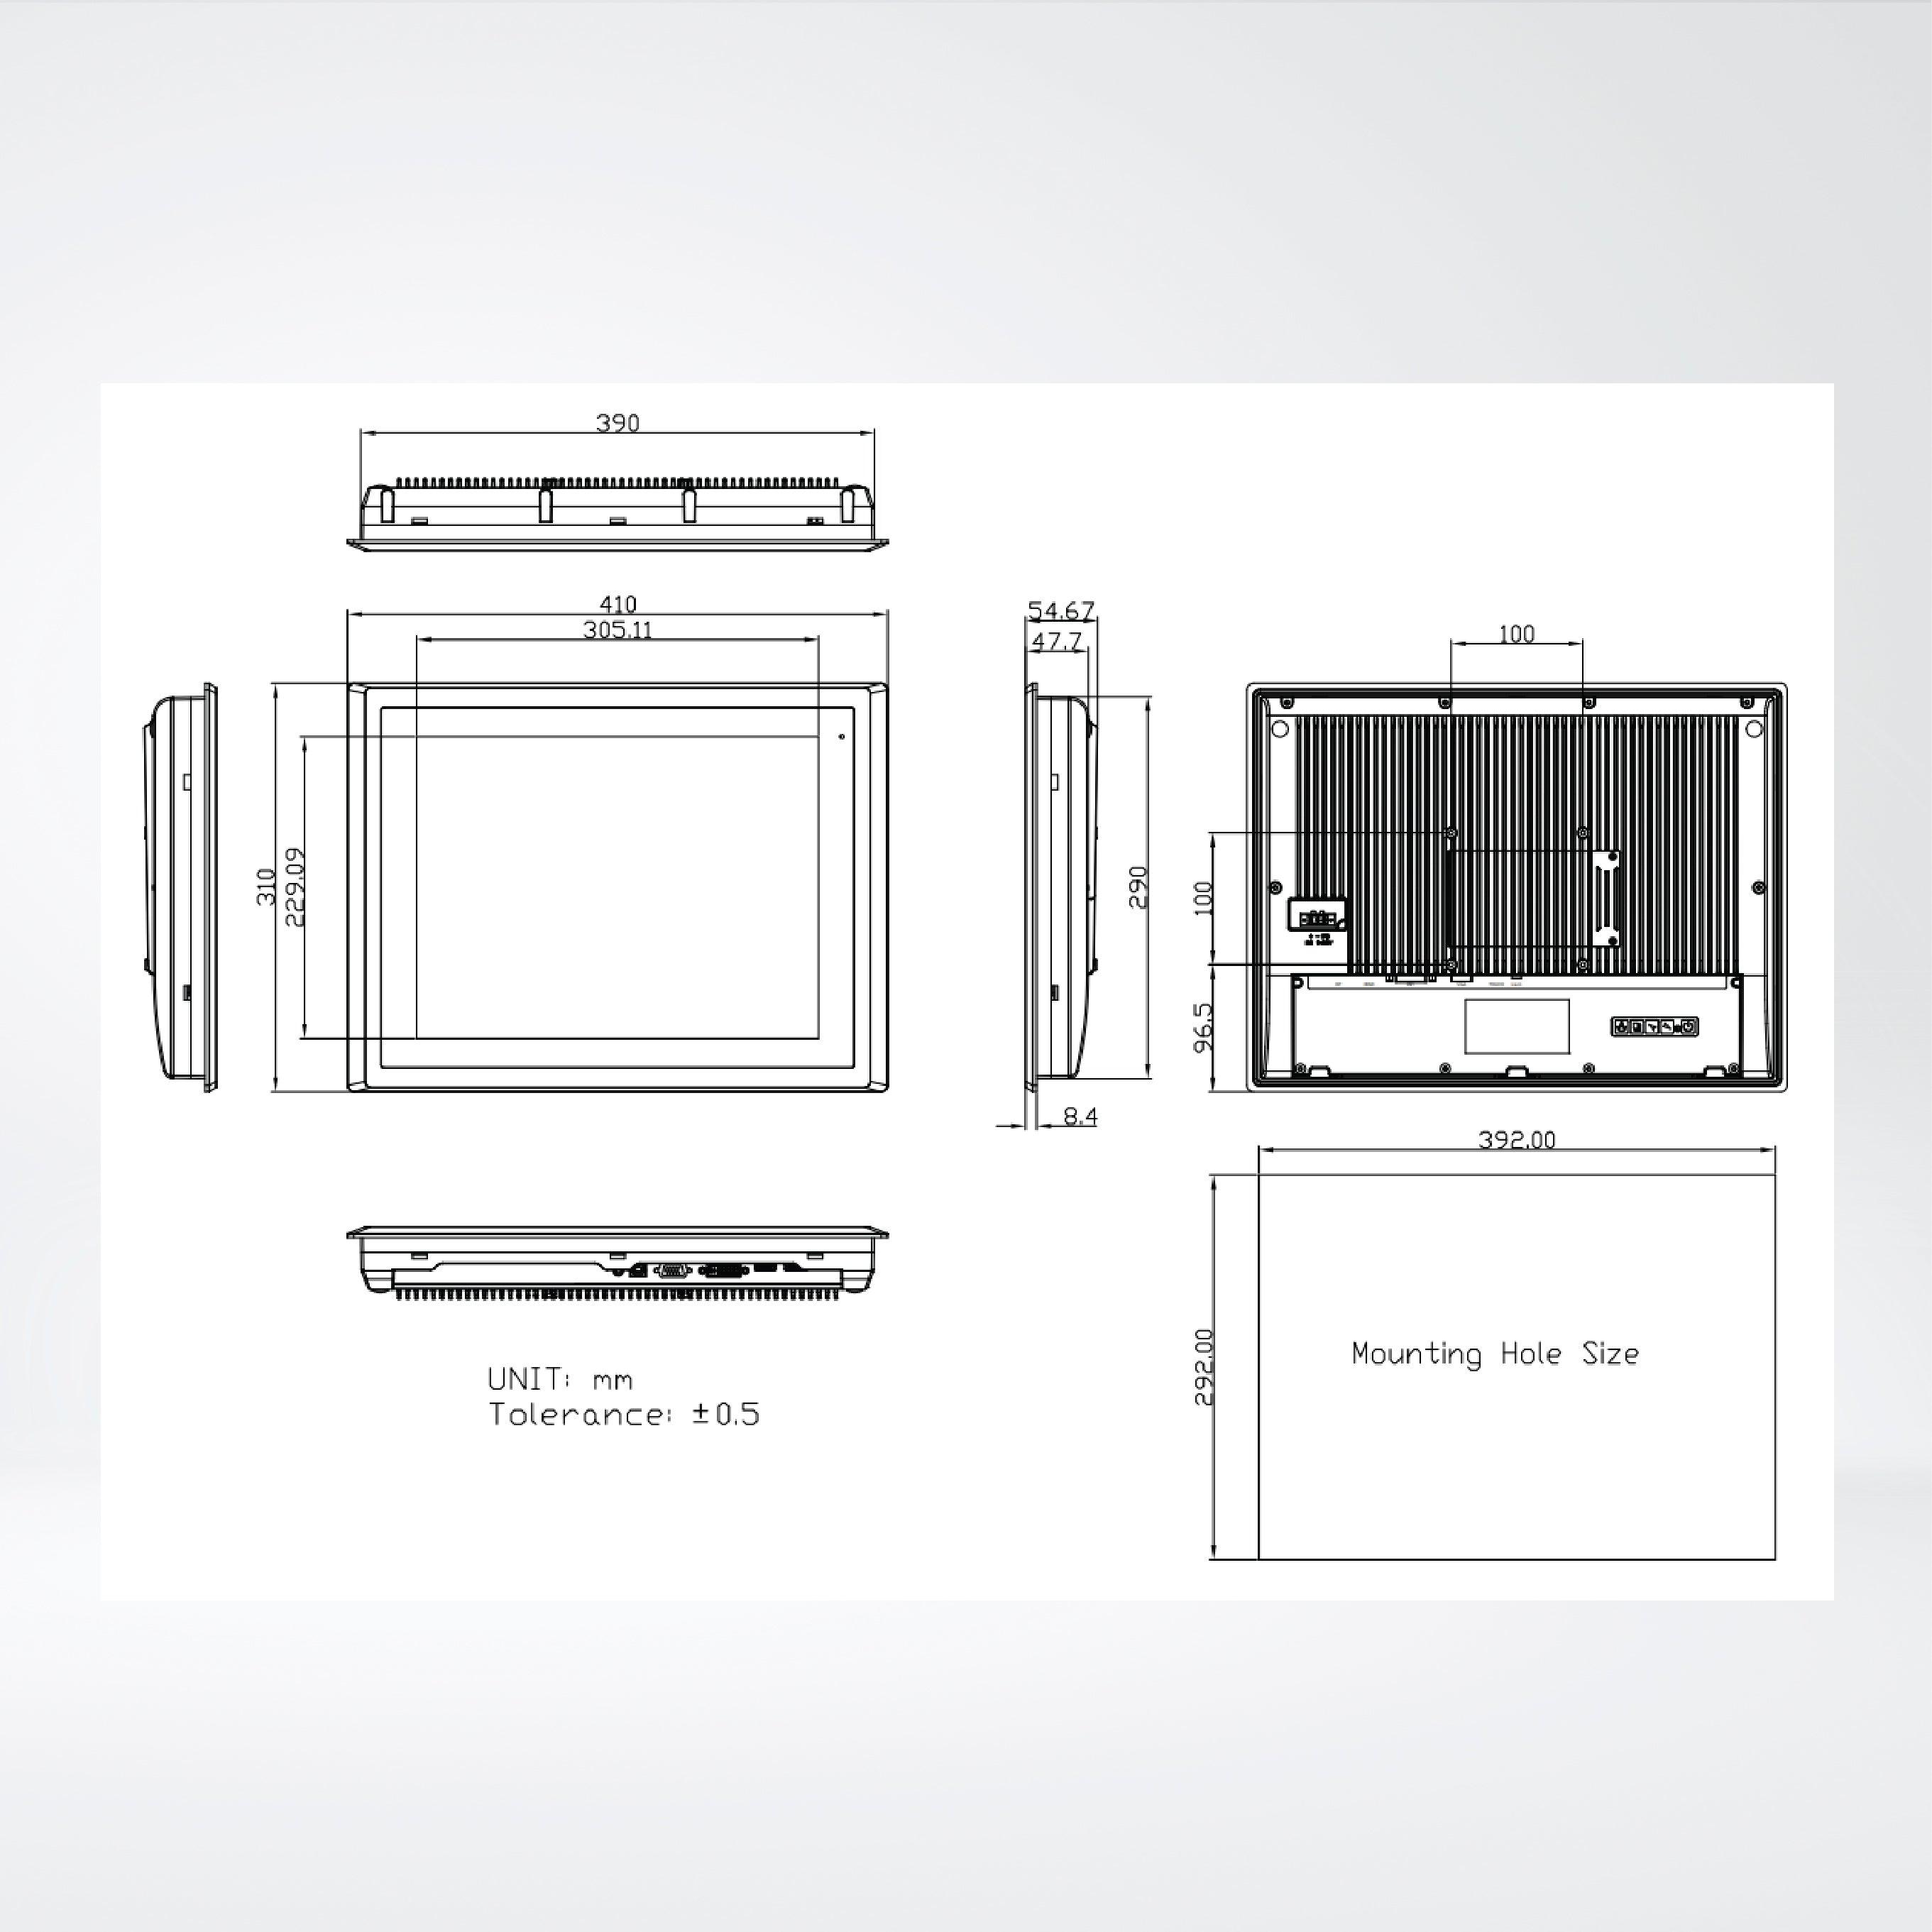 ARCDIS-115APRG(H) 15” Front Panel IP66 Aluminum Die-casting Display - Riverplus